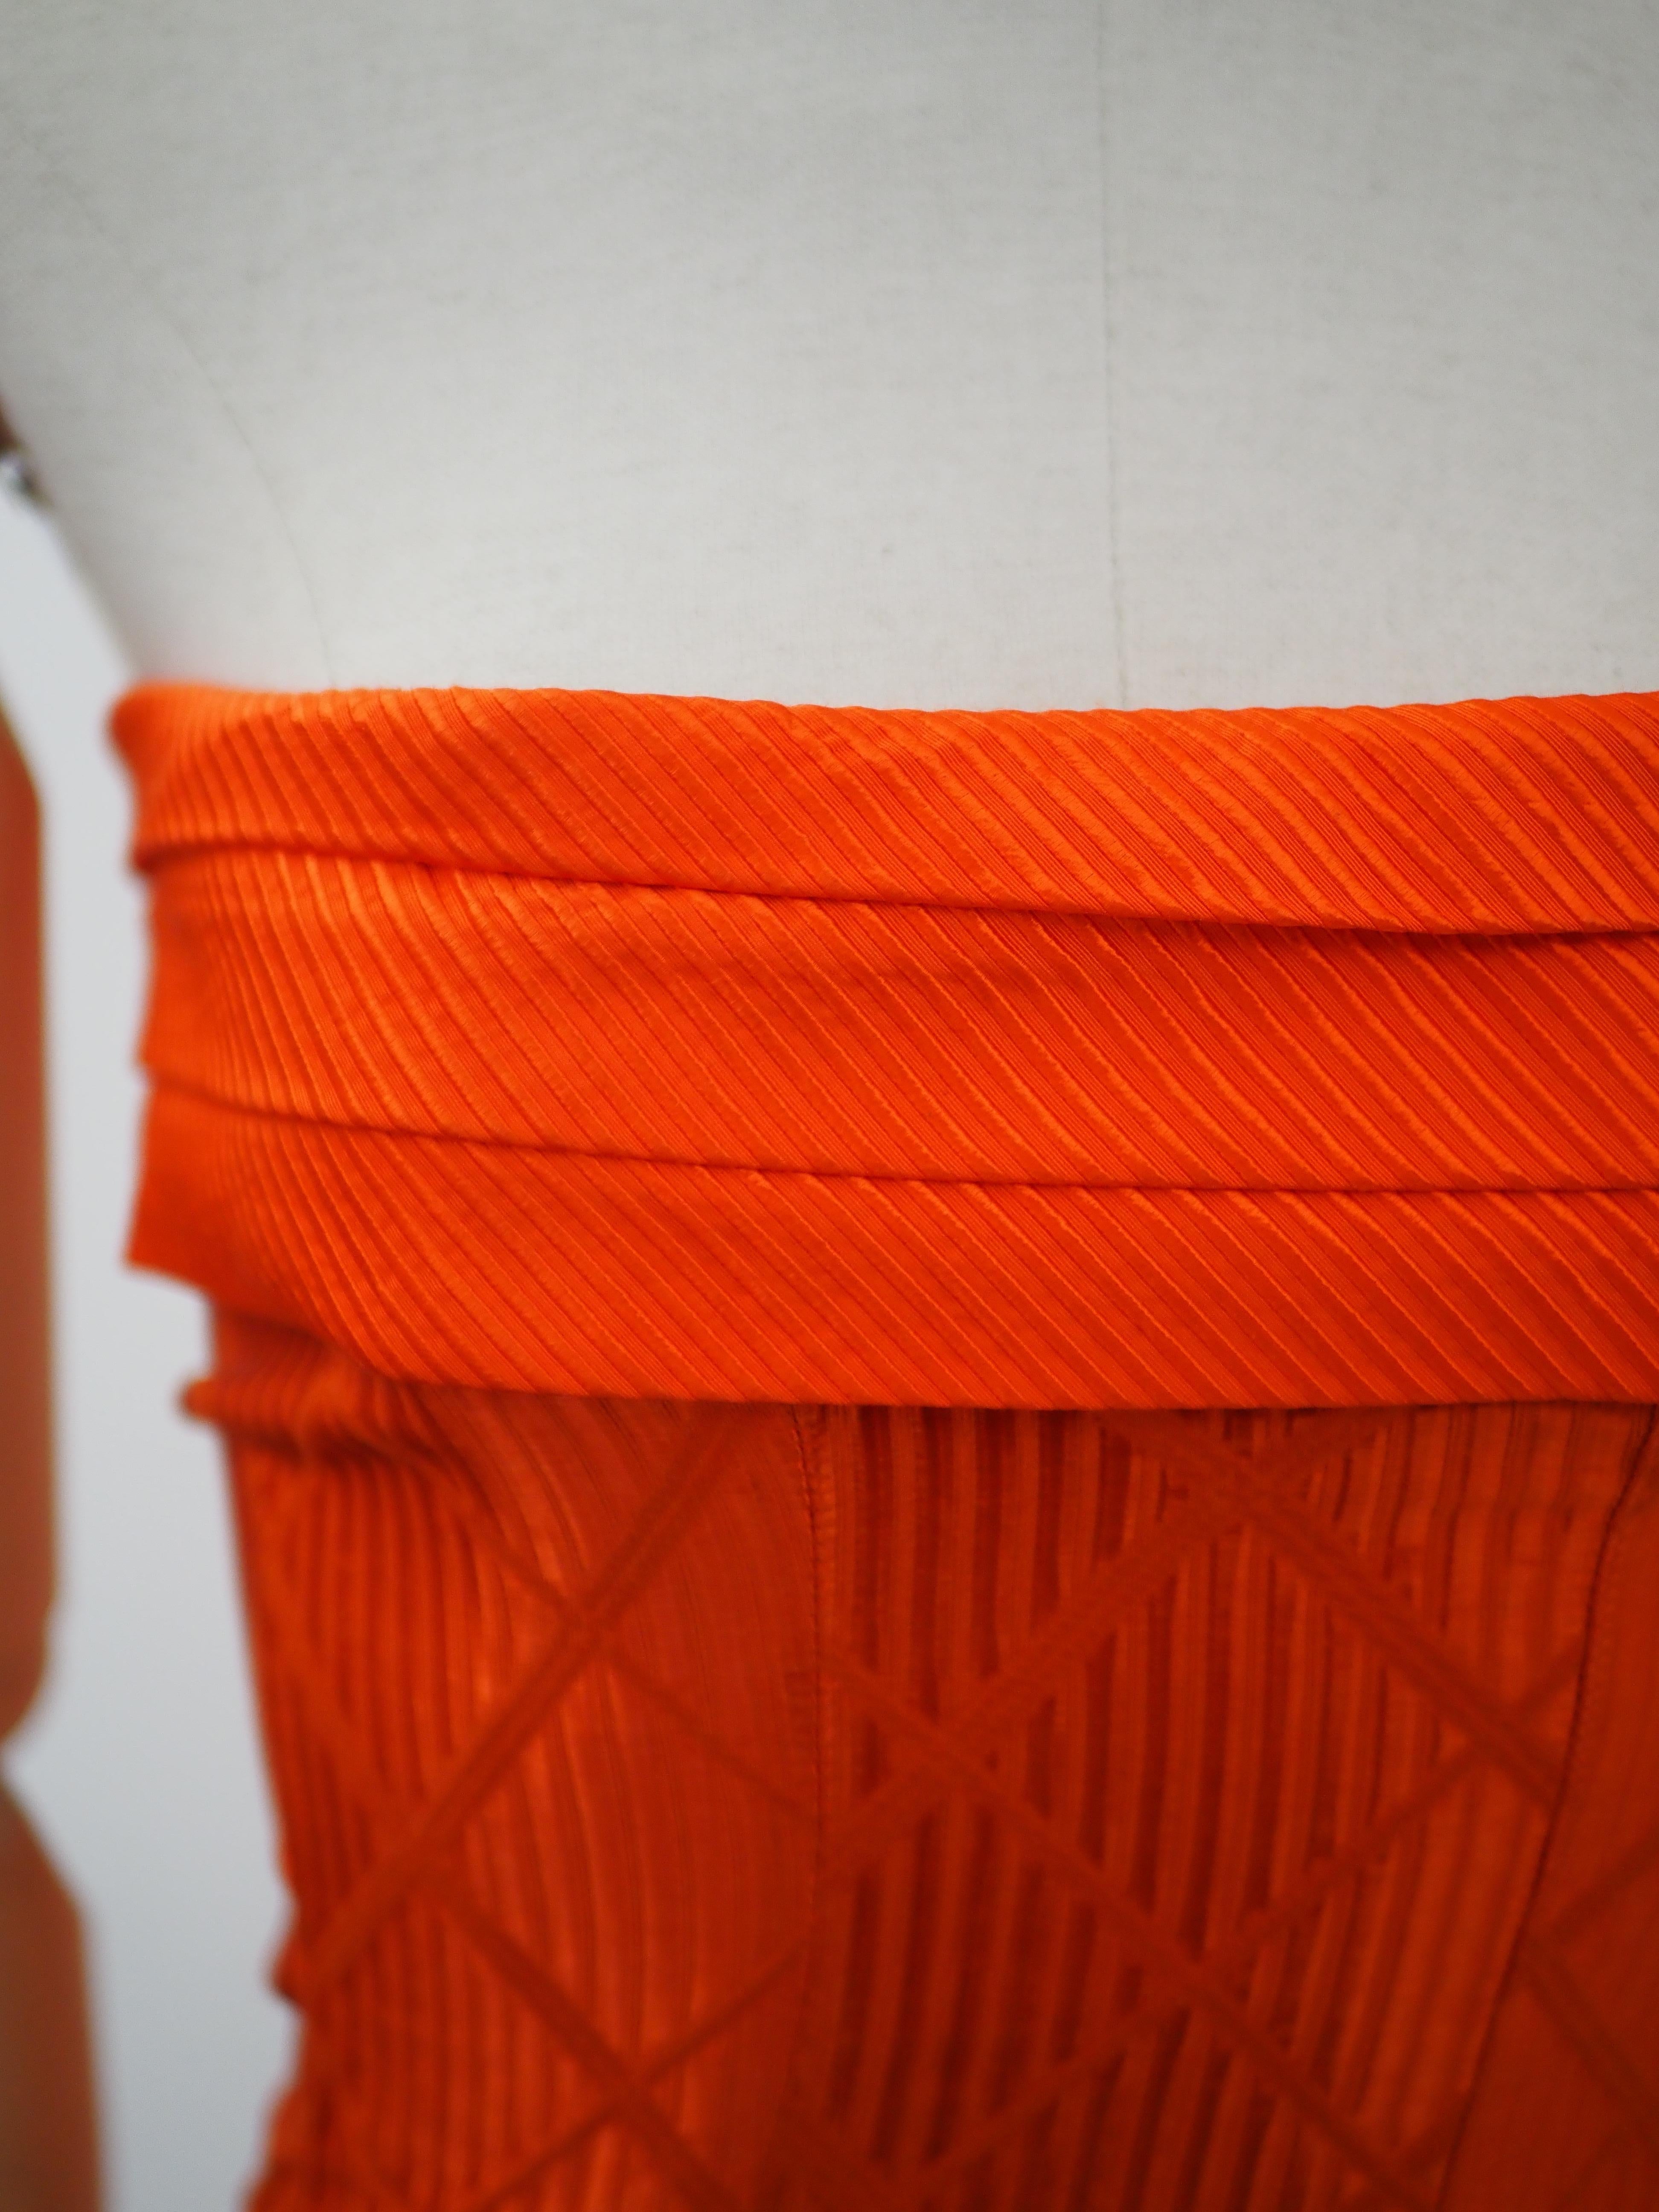 Versus by Gianni Versace orange dress 3